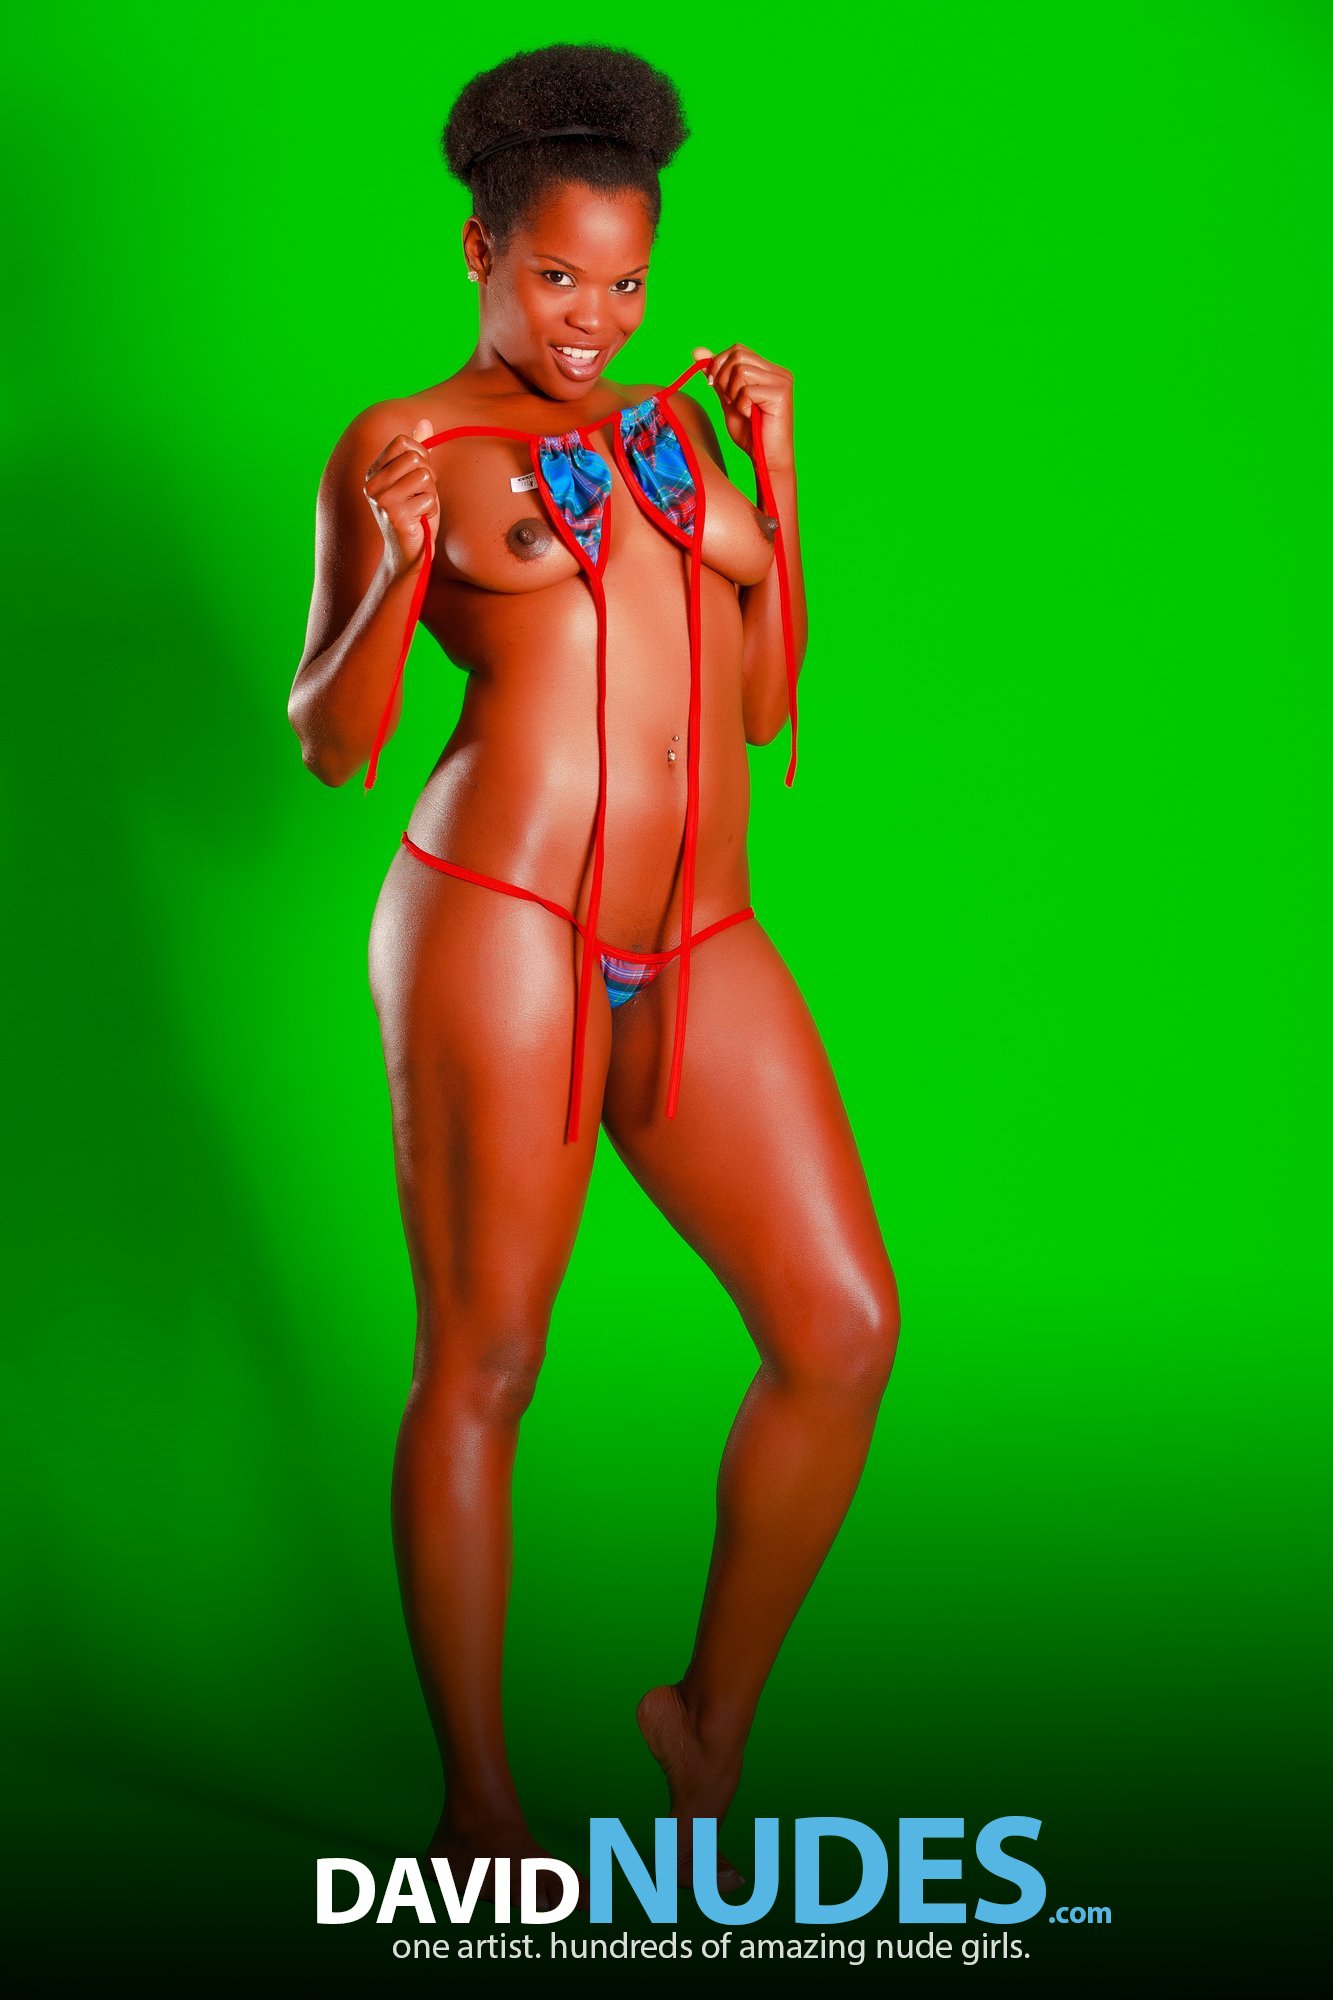 Big Boobs Alli Sex - Nudes Alli On The Green Hot Ebony Teen Shows Skin And Strips Her Big Boobs  Out Of A Bikini Good Sex PornSexiezPix Web Porn